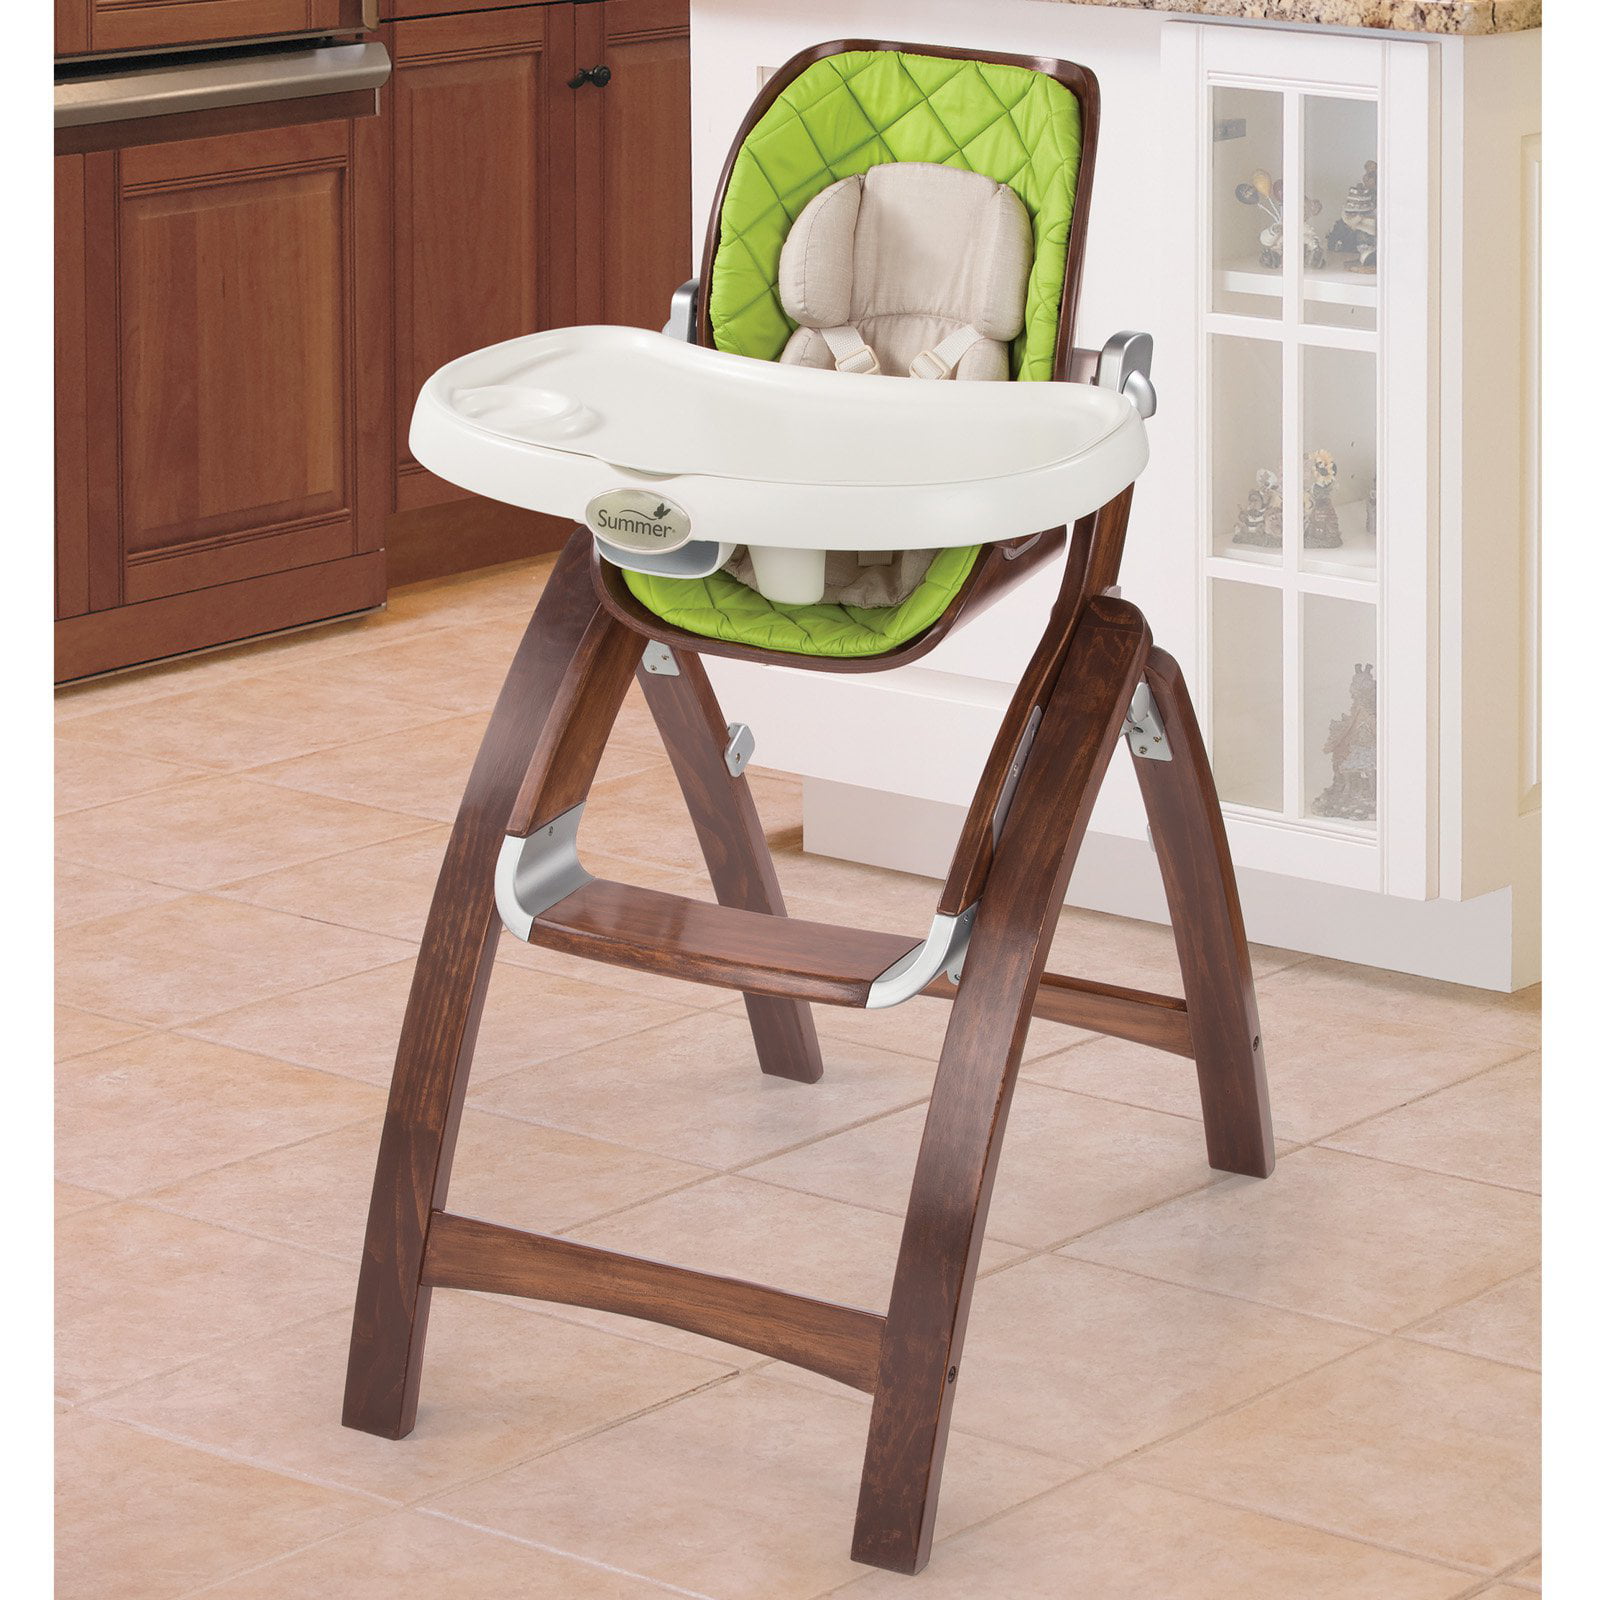 infant summer chair